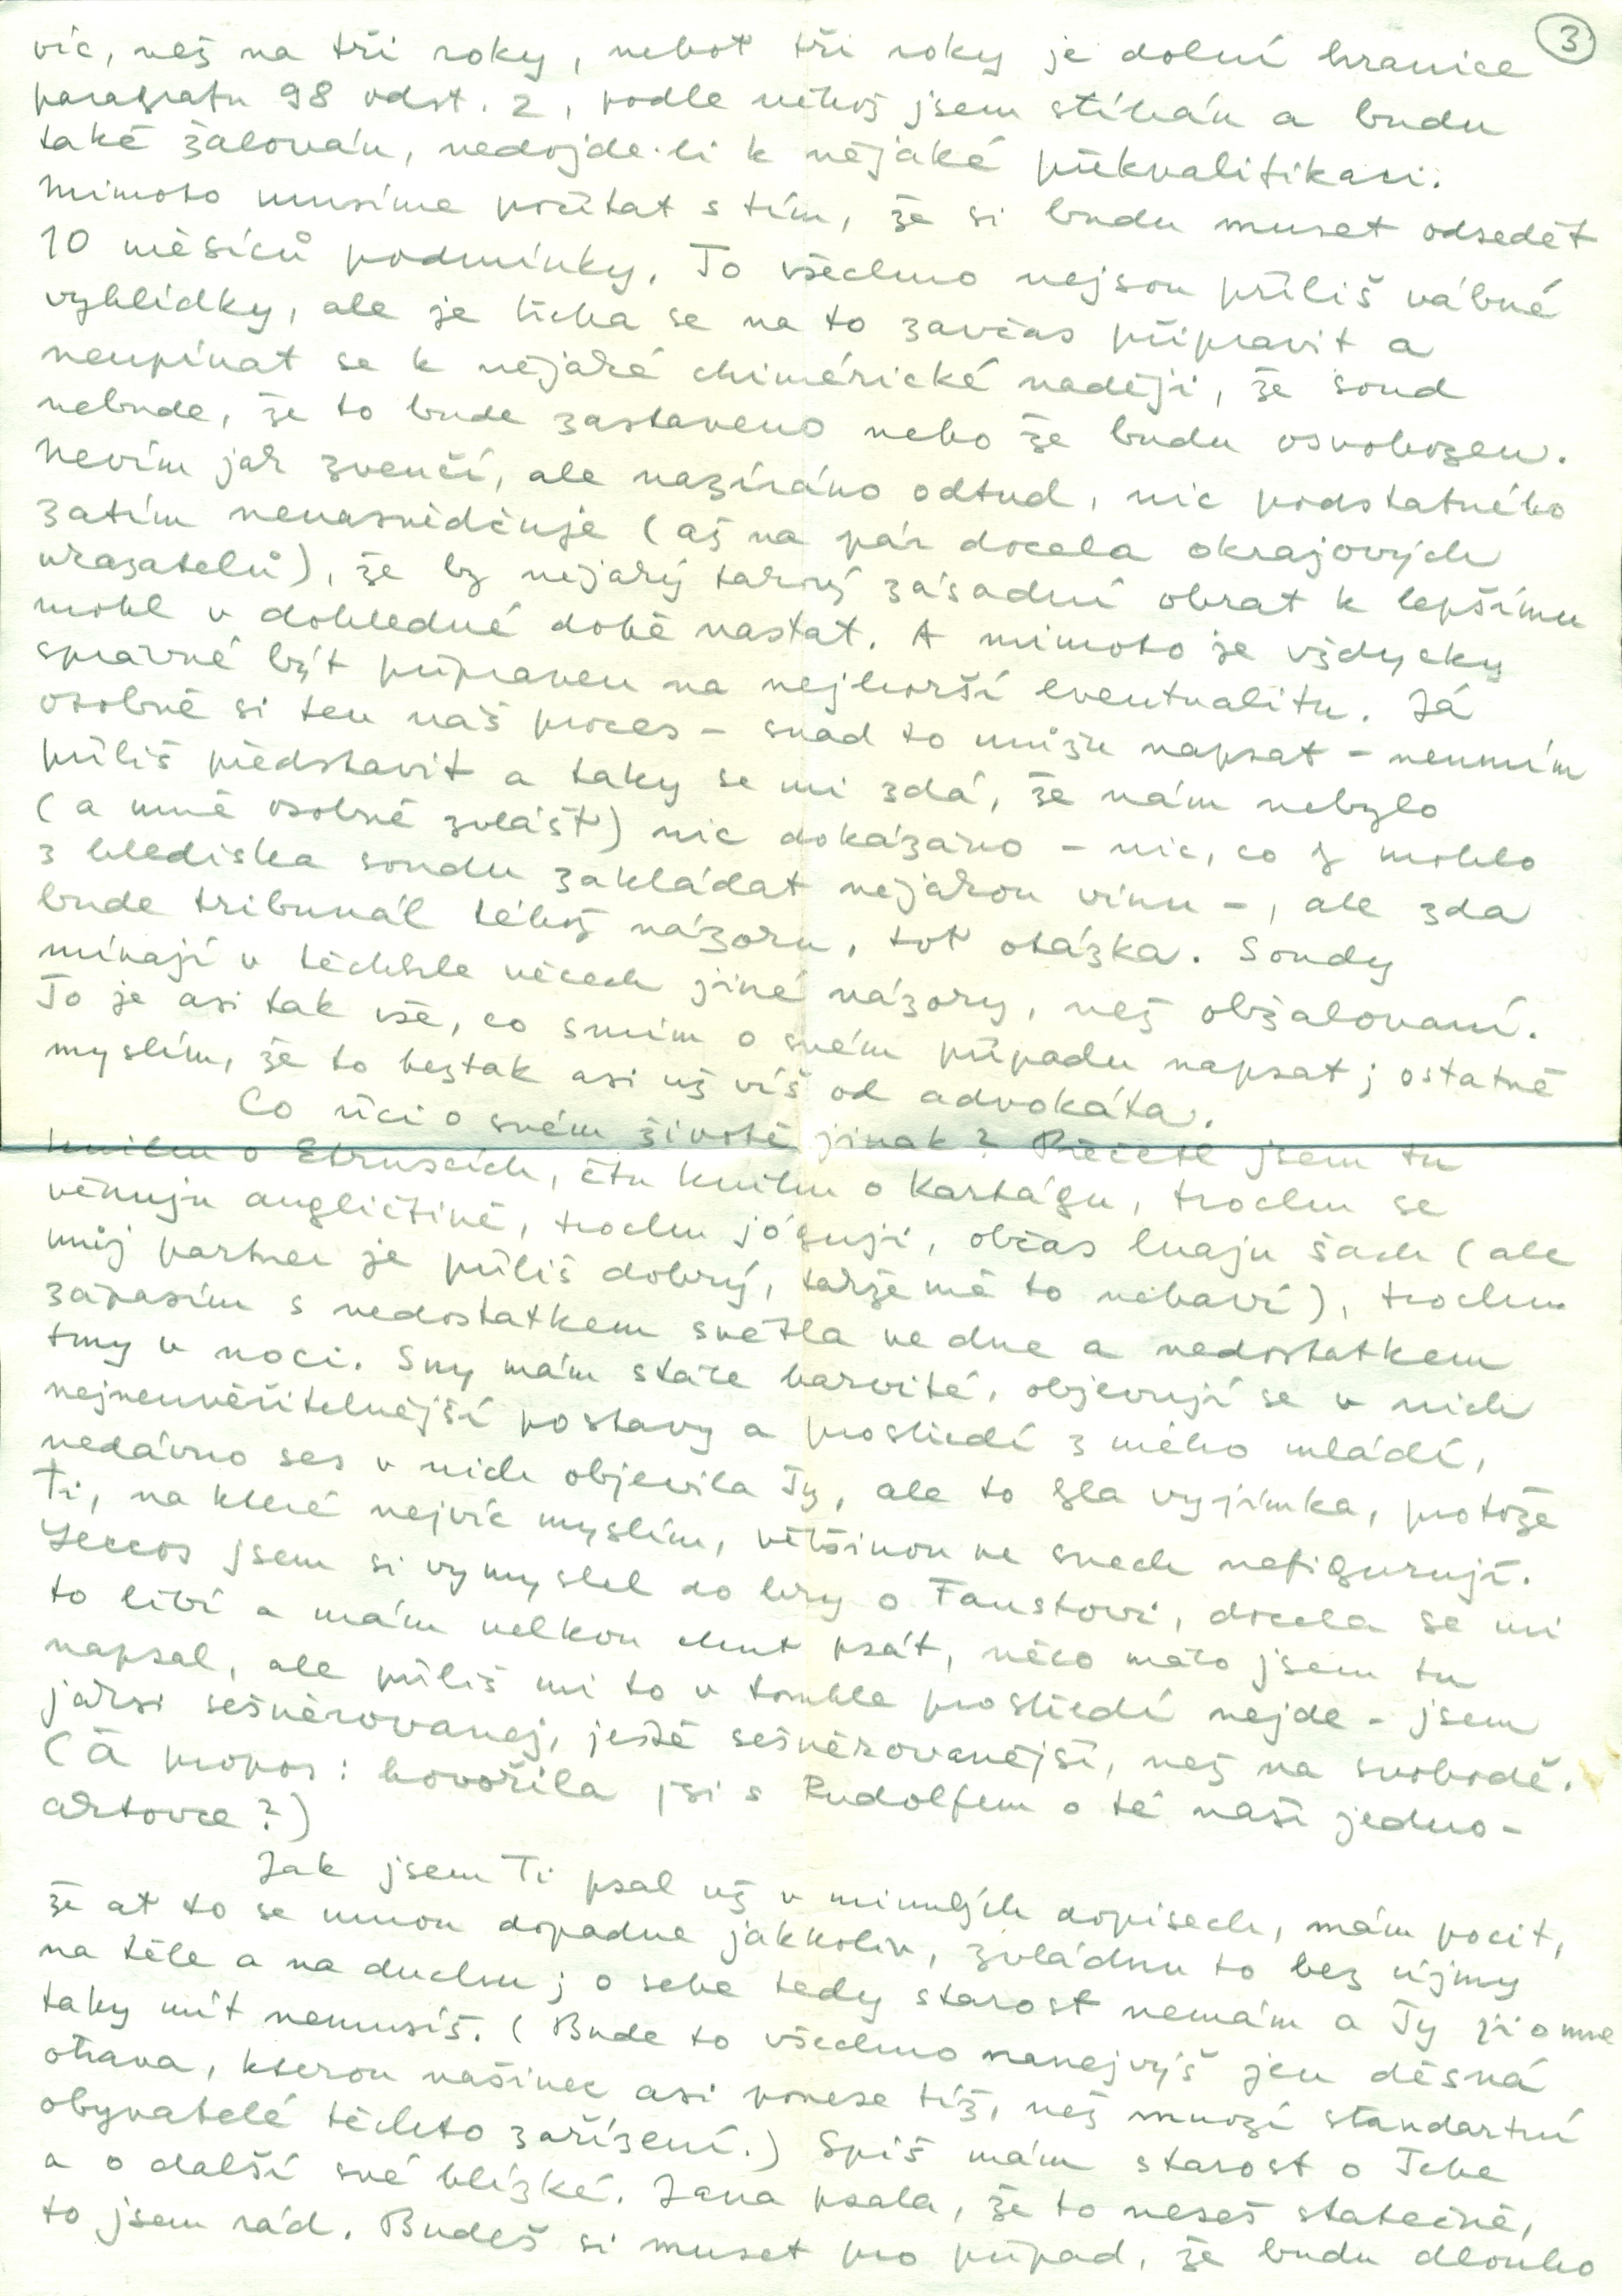 Václav Havelʼs letter to Olga Havlová, 8 July 1979